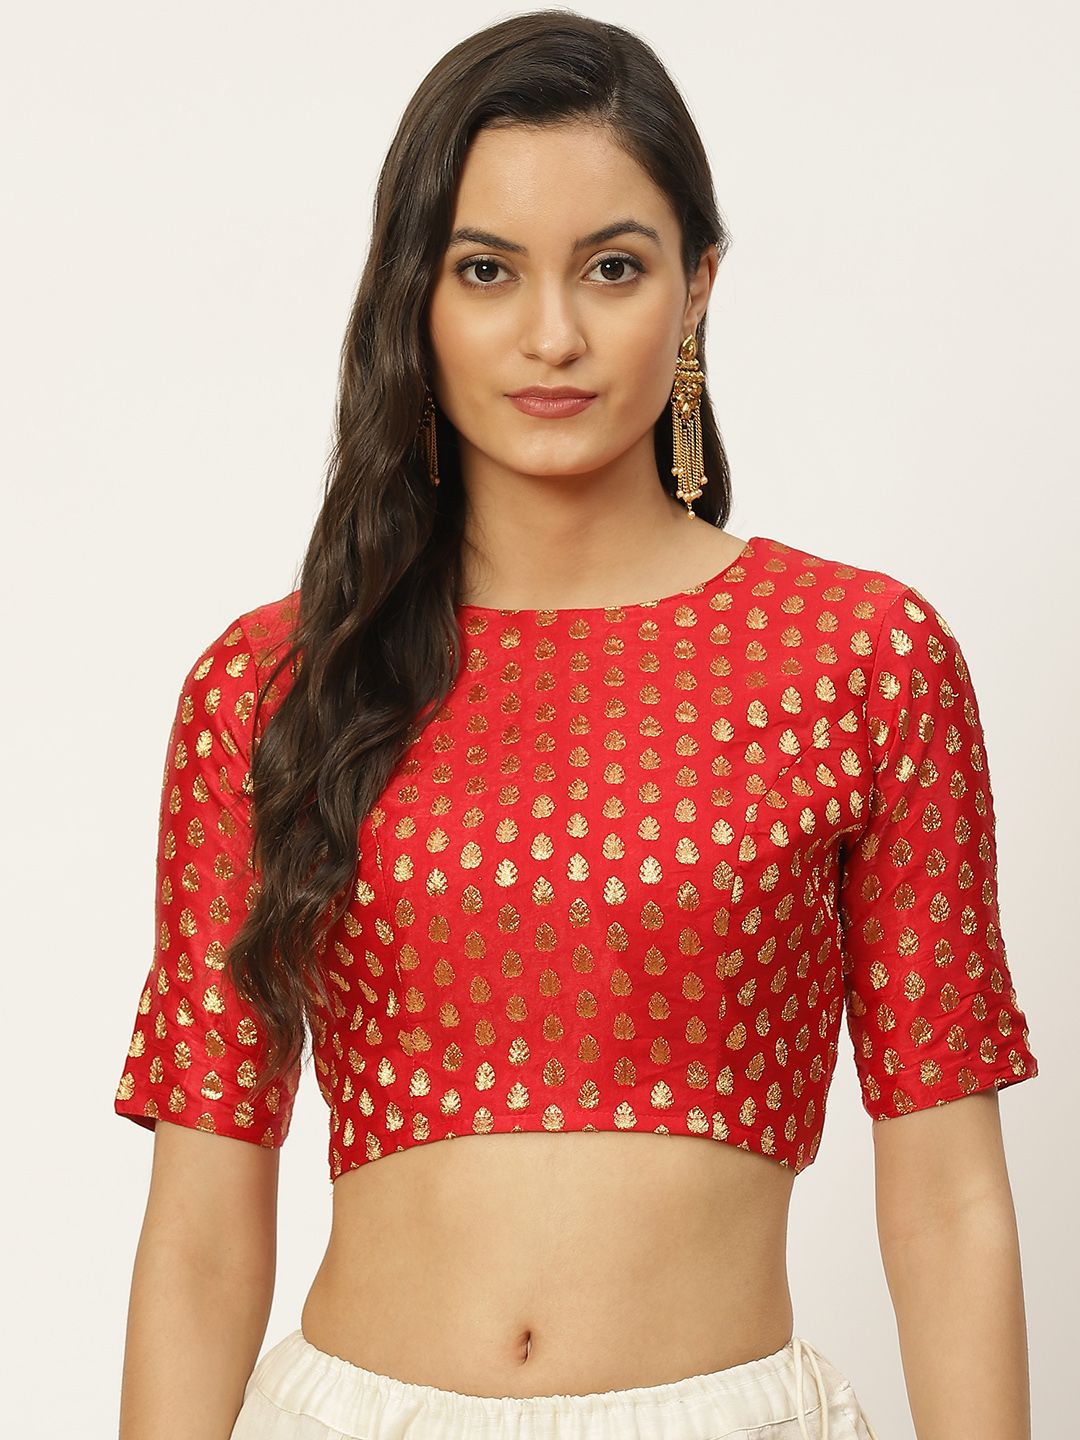 Studio Shringaar Red & Golden Brocade Self Design Readymade Saree Blouse Price in India